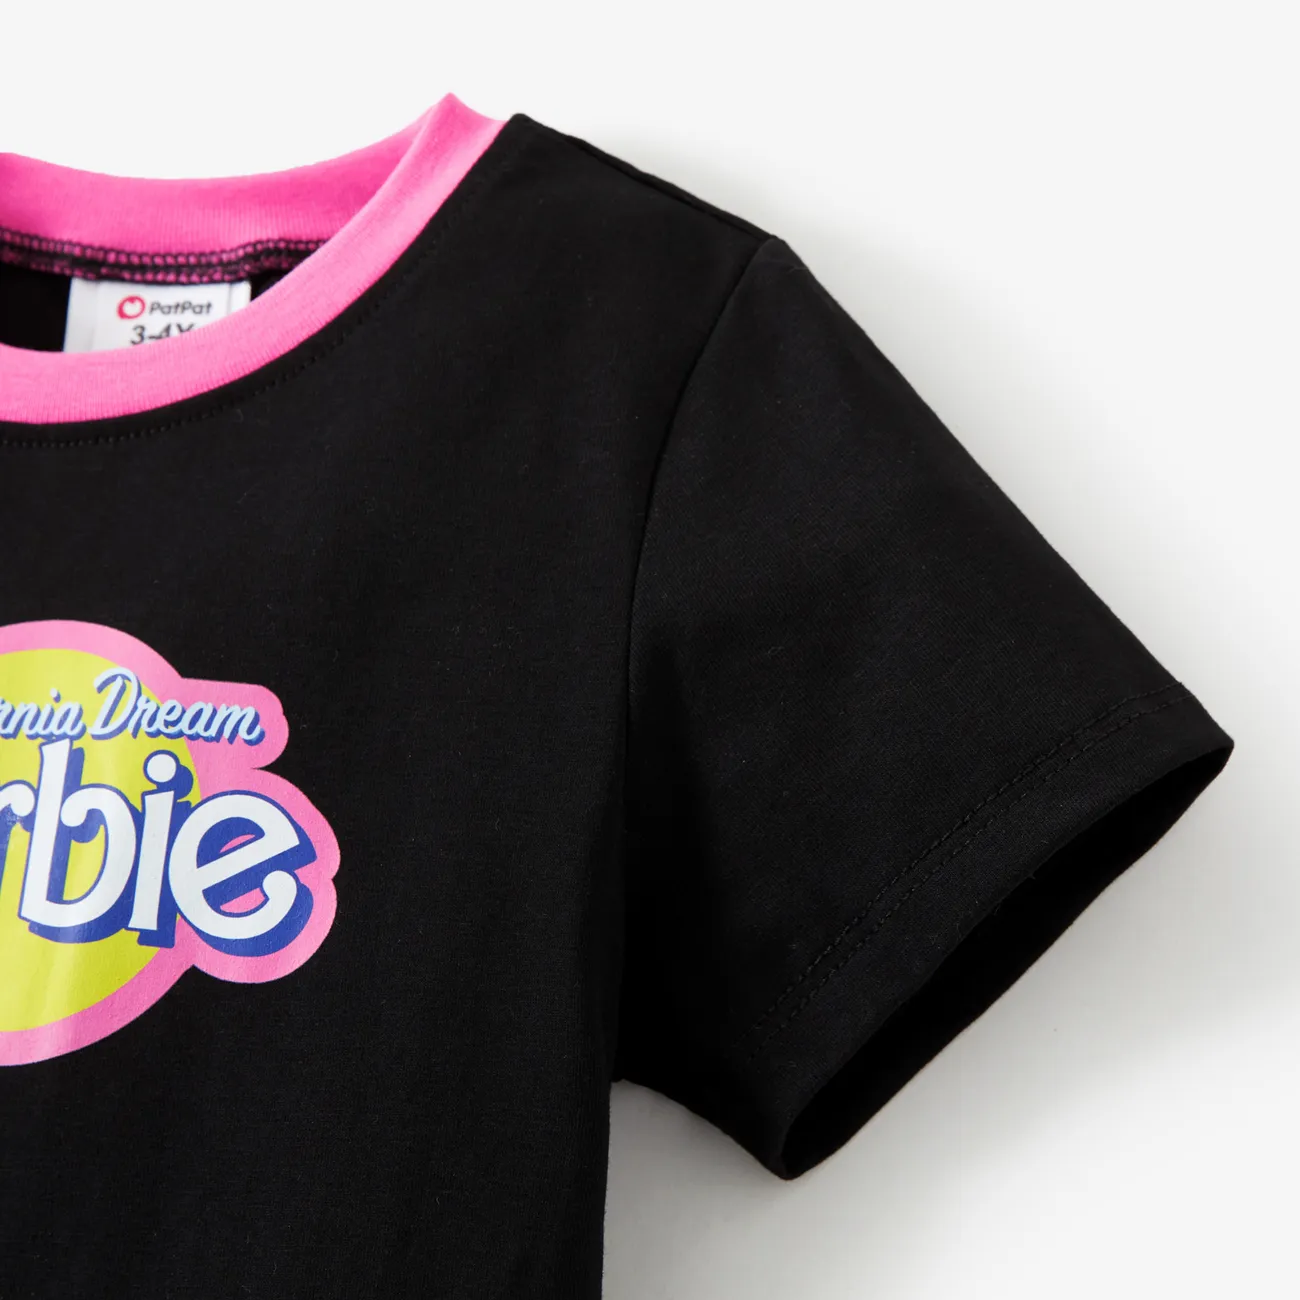 Barbie Mom and Me 95% Cotton Contrast print T-shirt Black big image 1